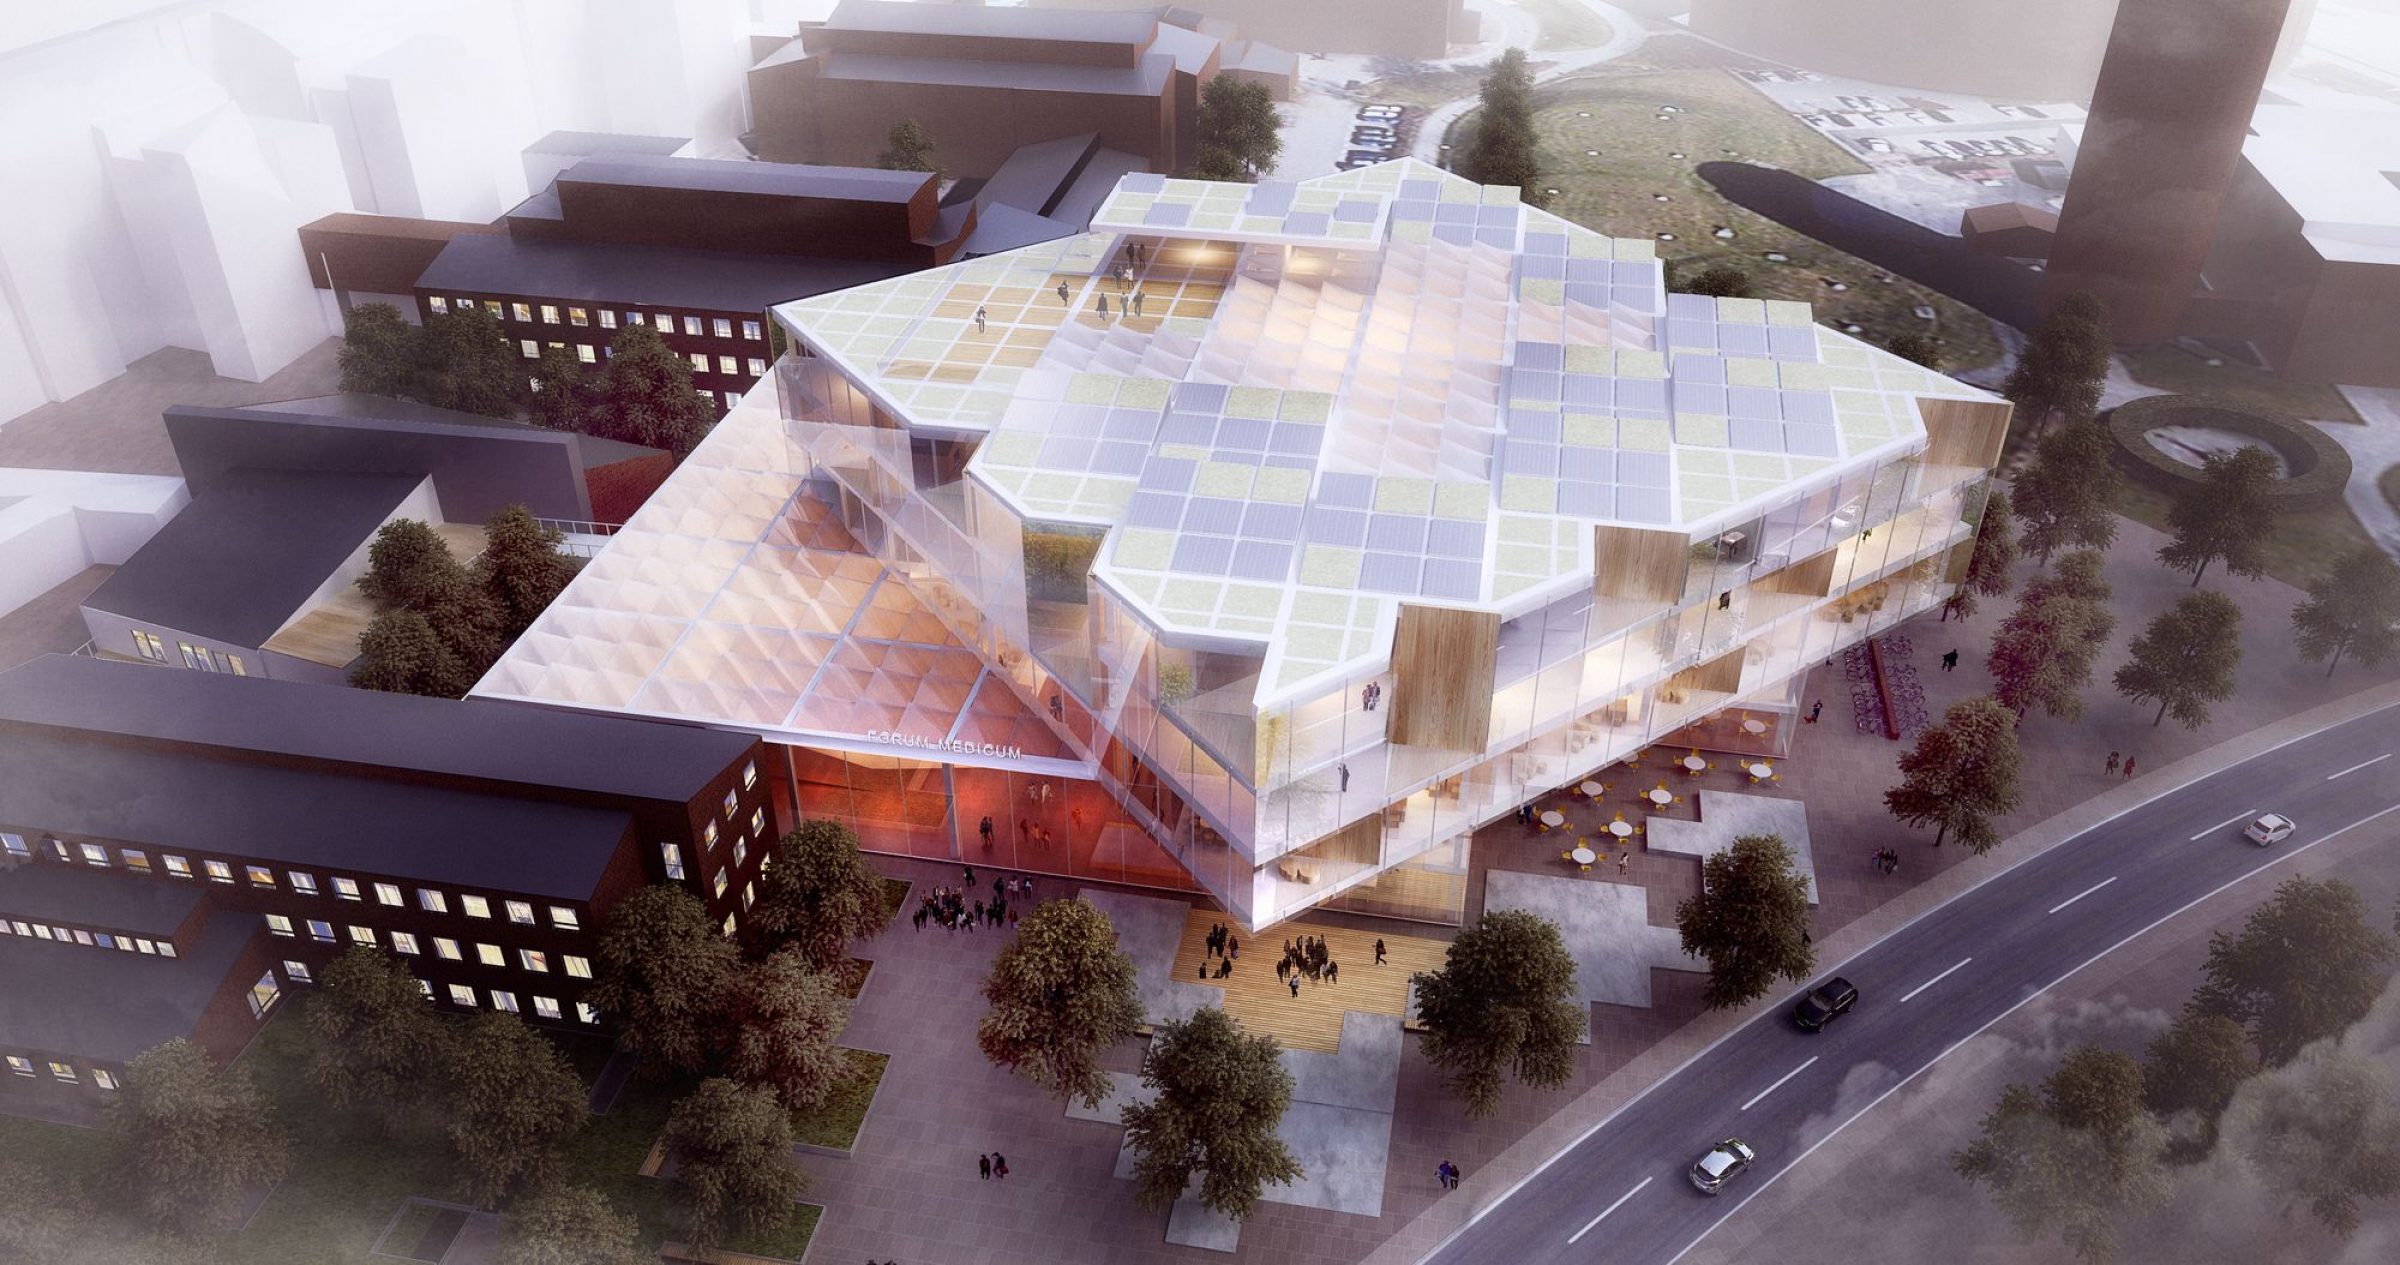 Lund University Henning Larsen Architects Arch O Com